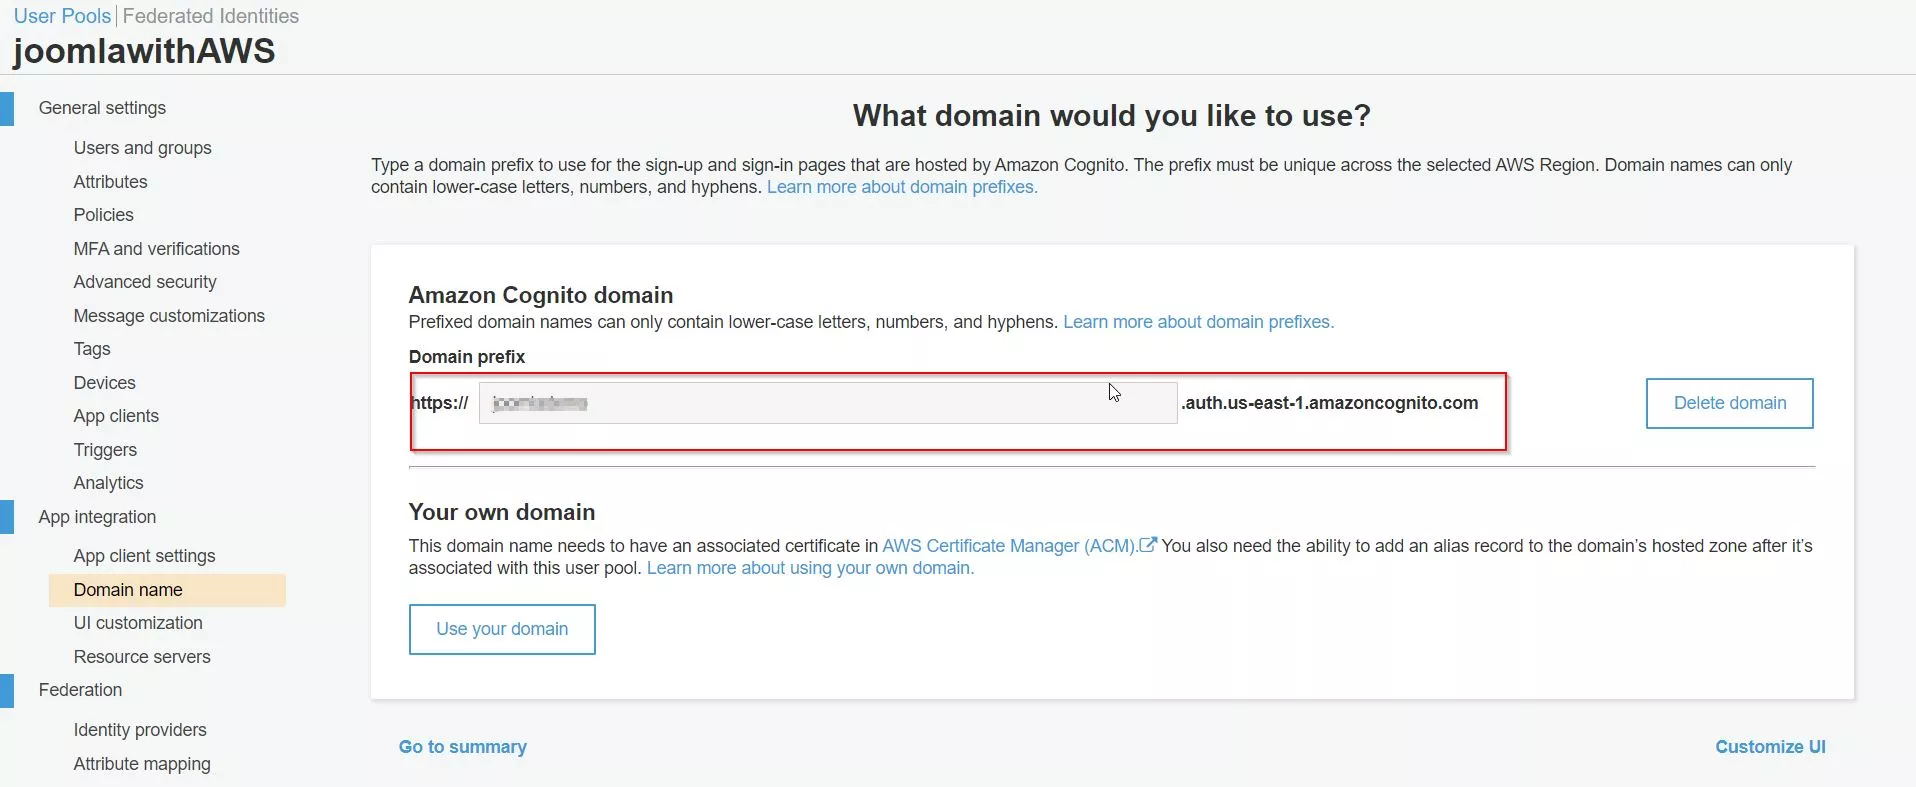 Login using Joomla into AWS as SP | AWS Single Sign-On SSO with Joomla, Manage User Pools